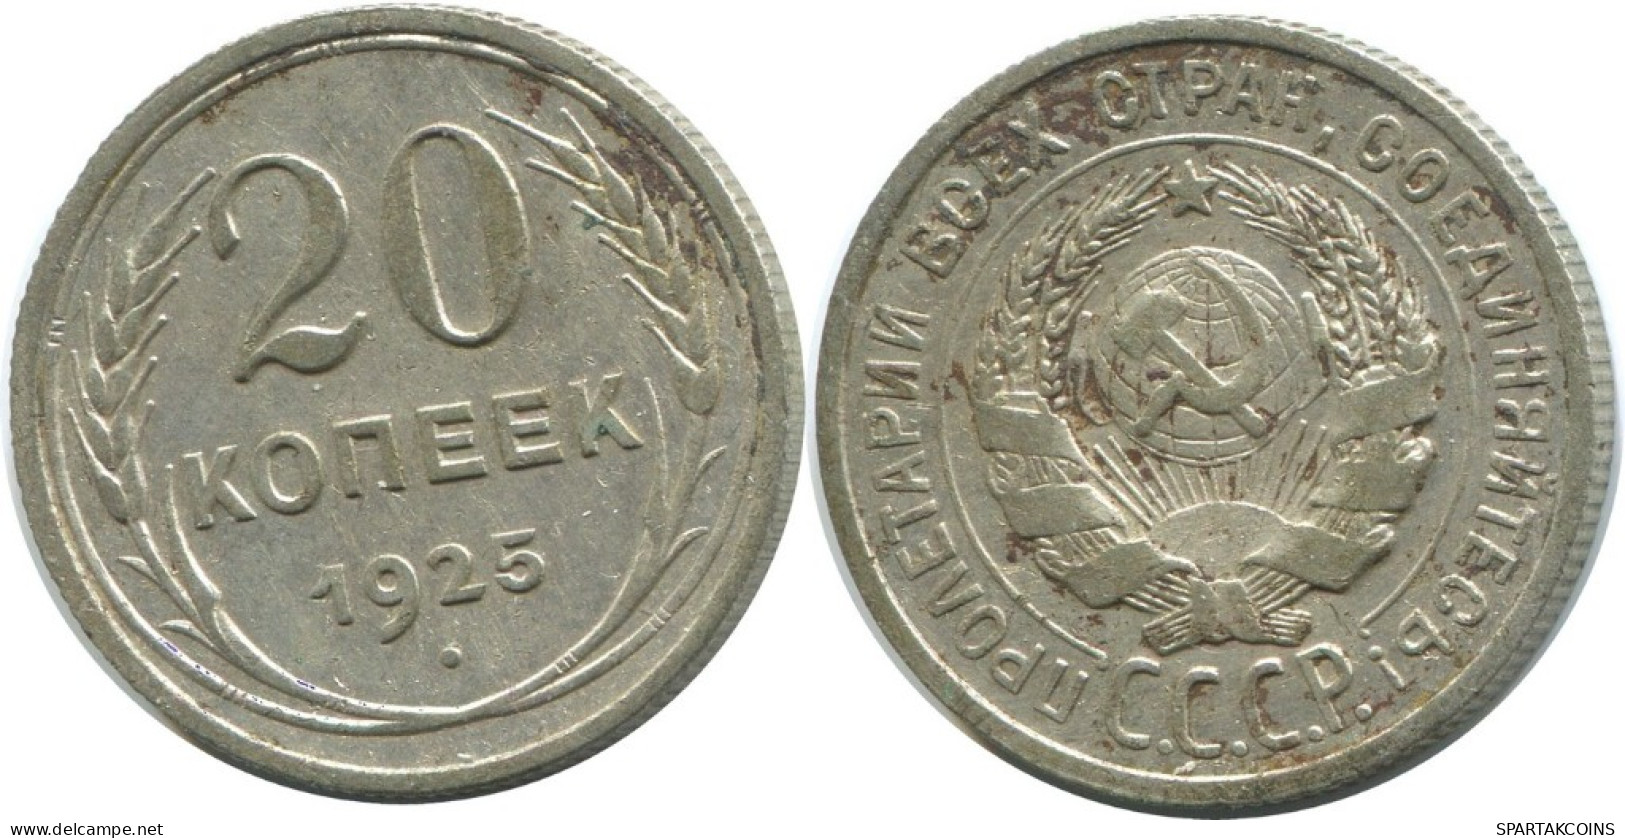 20 KOPEKS 1925 RUSSIA USSR SILVER Coin HIGH GRADE #AF337.4.U.A - Russie